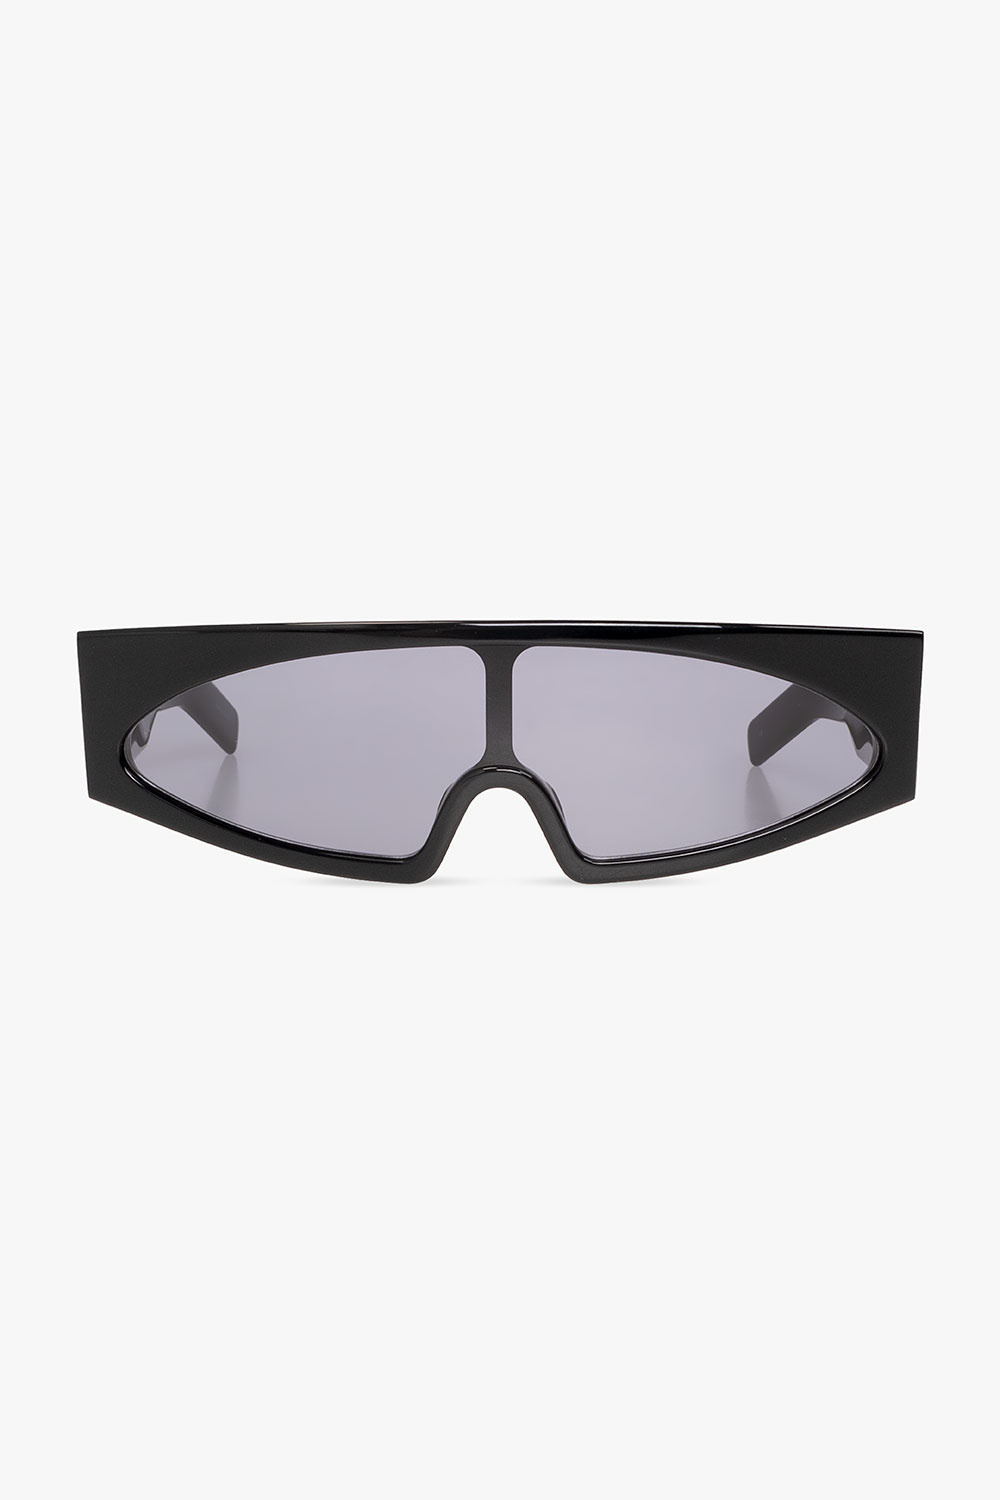 Rick Owens ‘Shield’ sunglasses